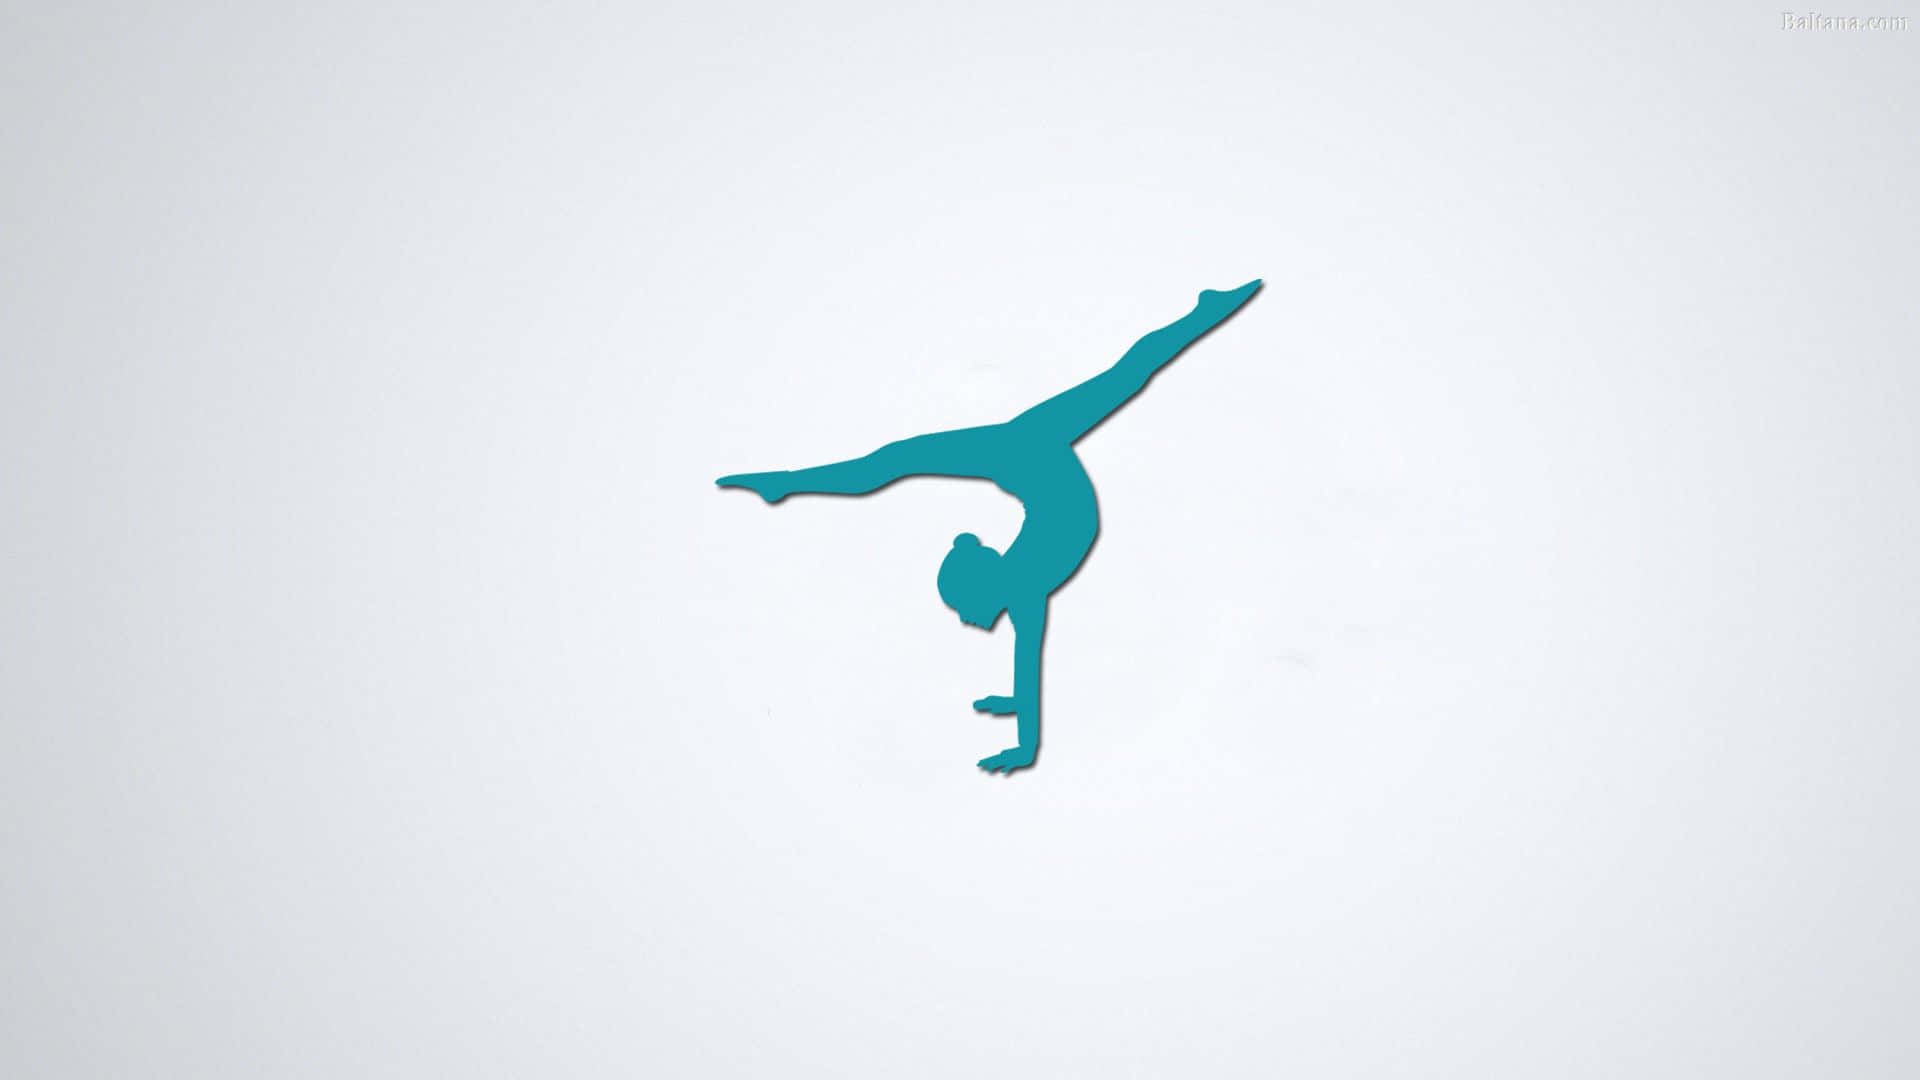 Artistic gymnast performing on balance beam